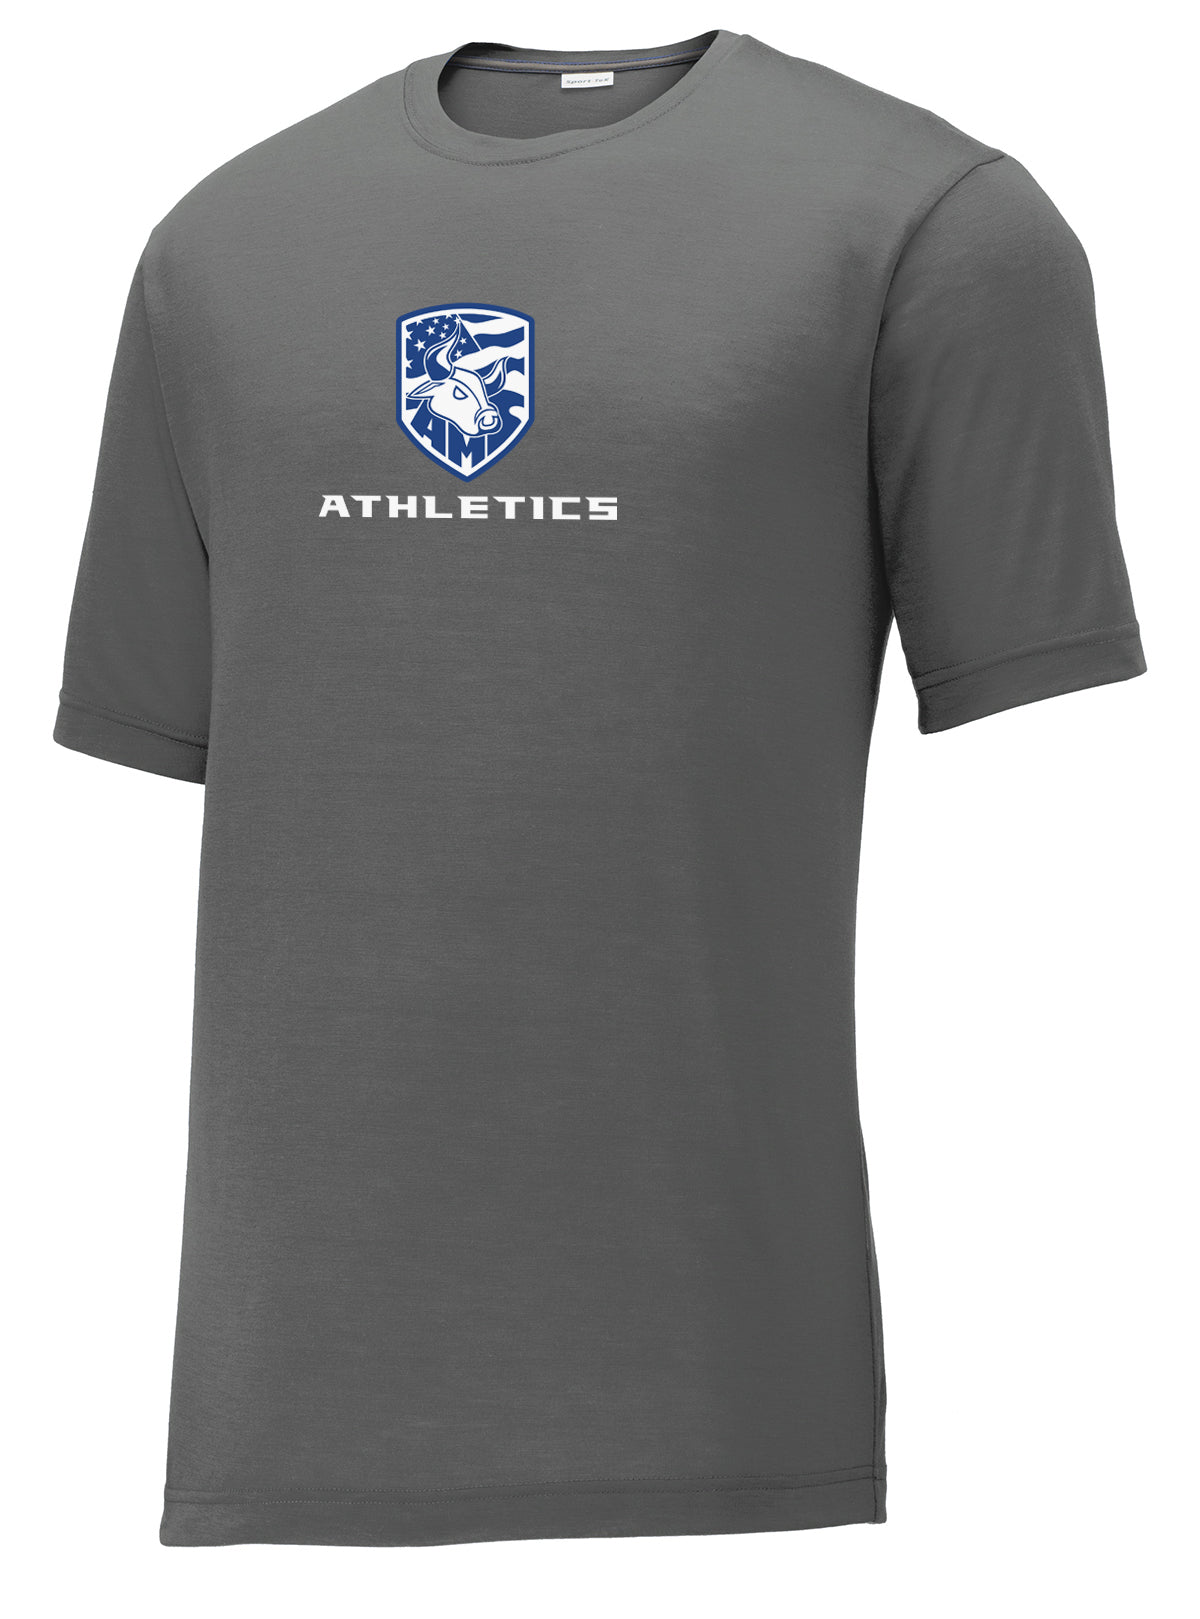 Accompsett Middle School Men's Performance T-Shirt (Grey)